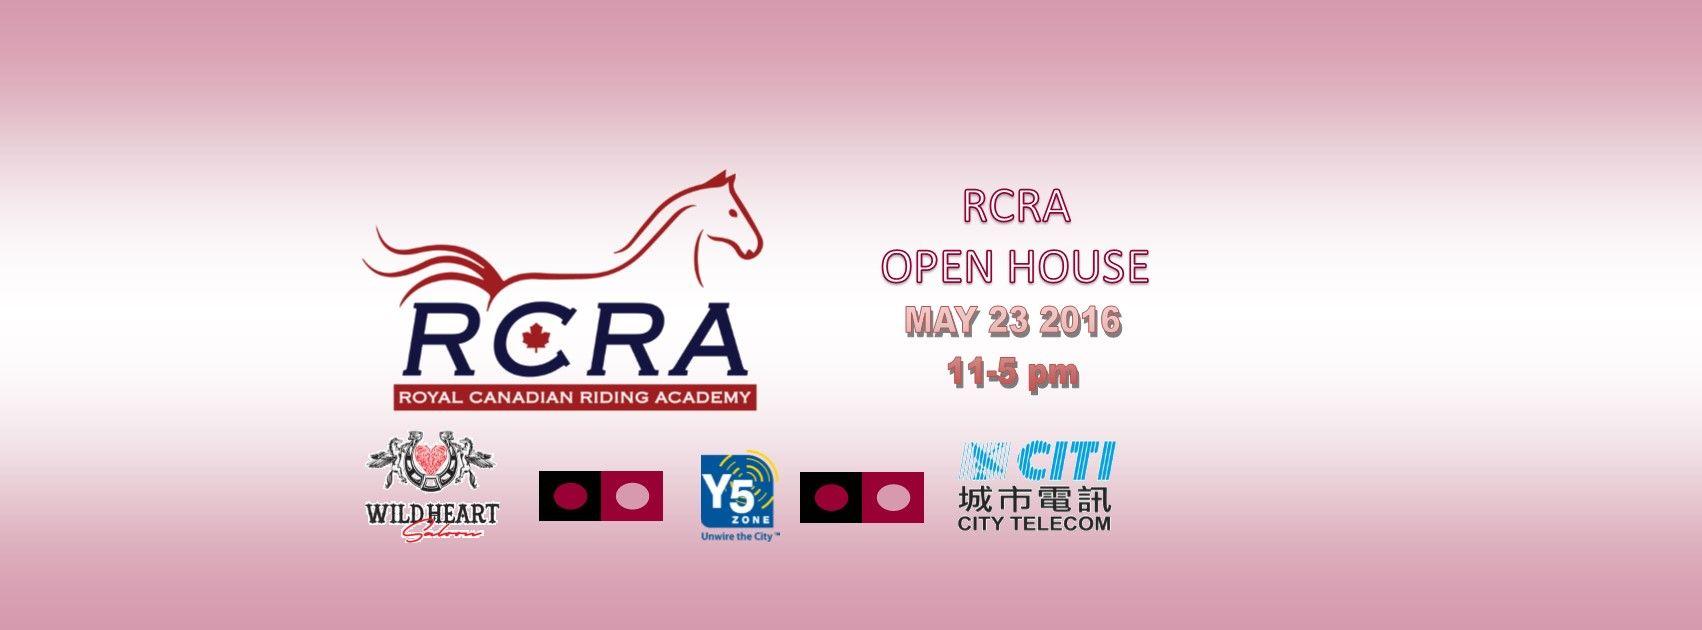 RCRA Logo - RCRA Open House May 23 2016 - RCRA